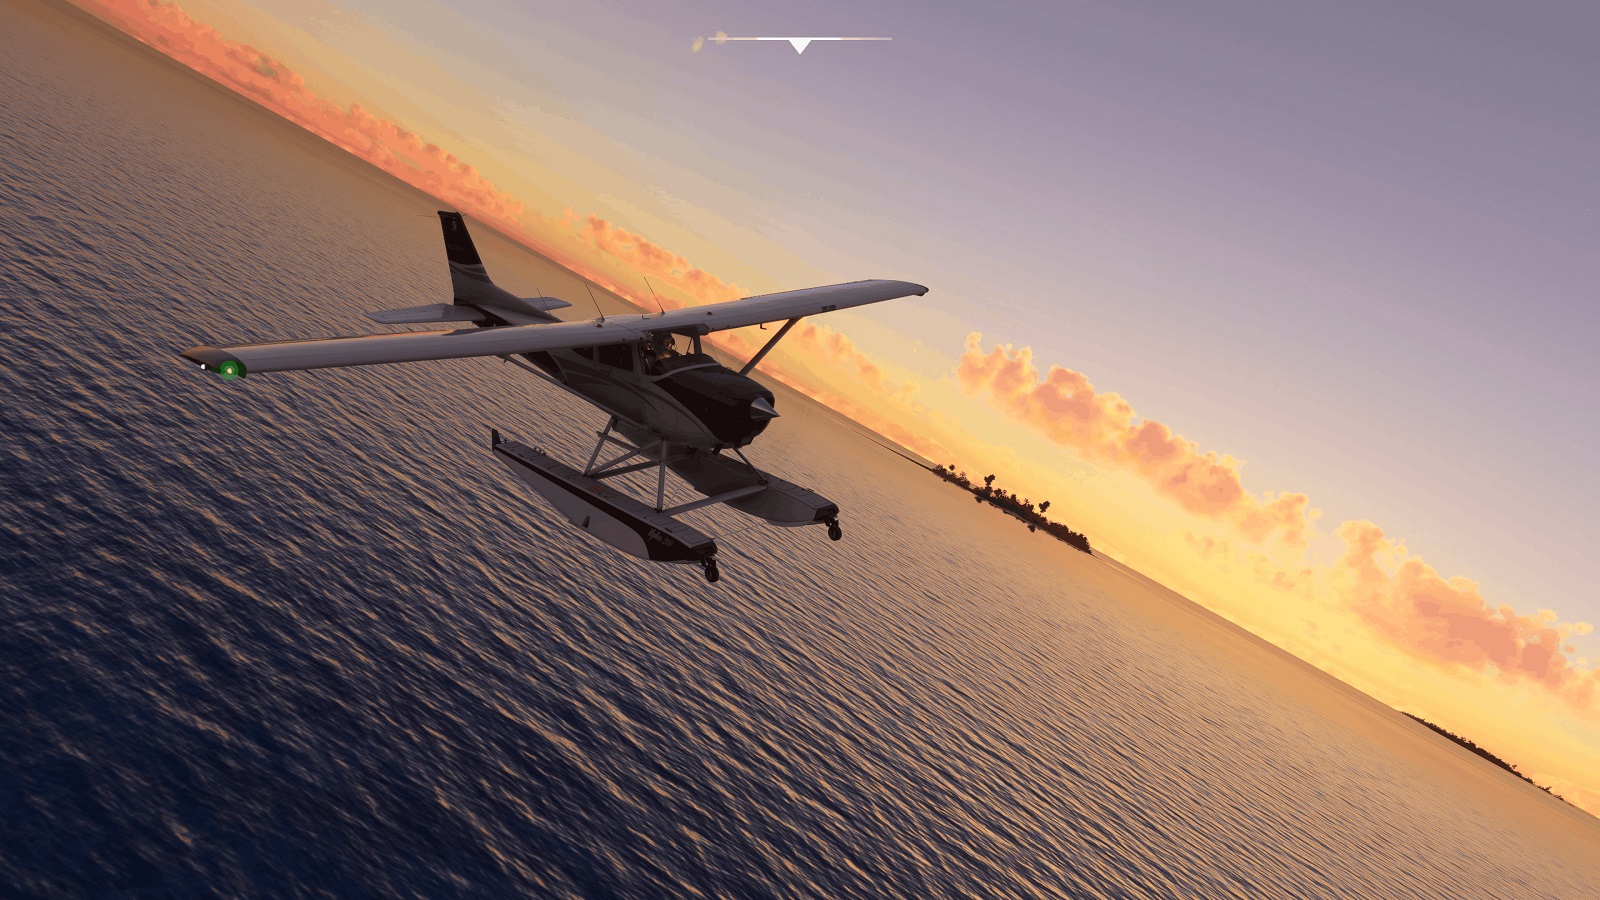 Flight Simulator Game of the Year Standard Edition Windows, Xbox